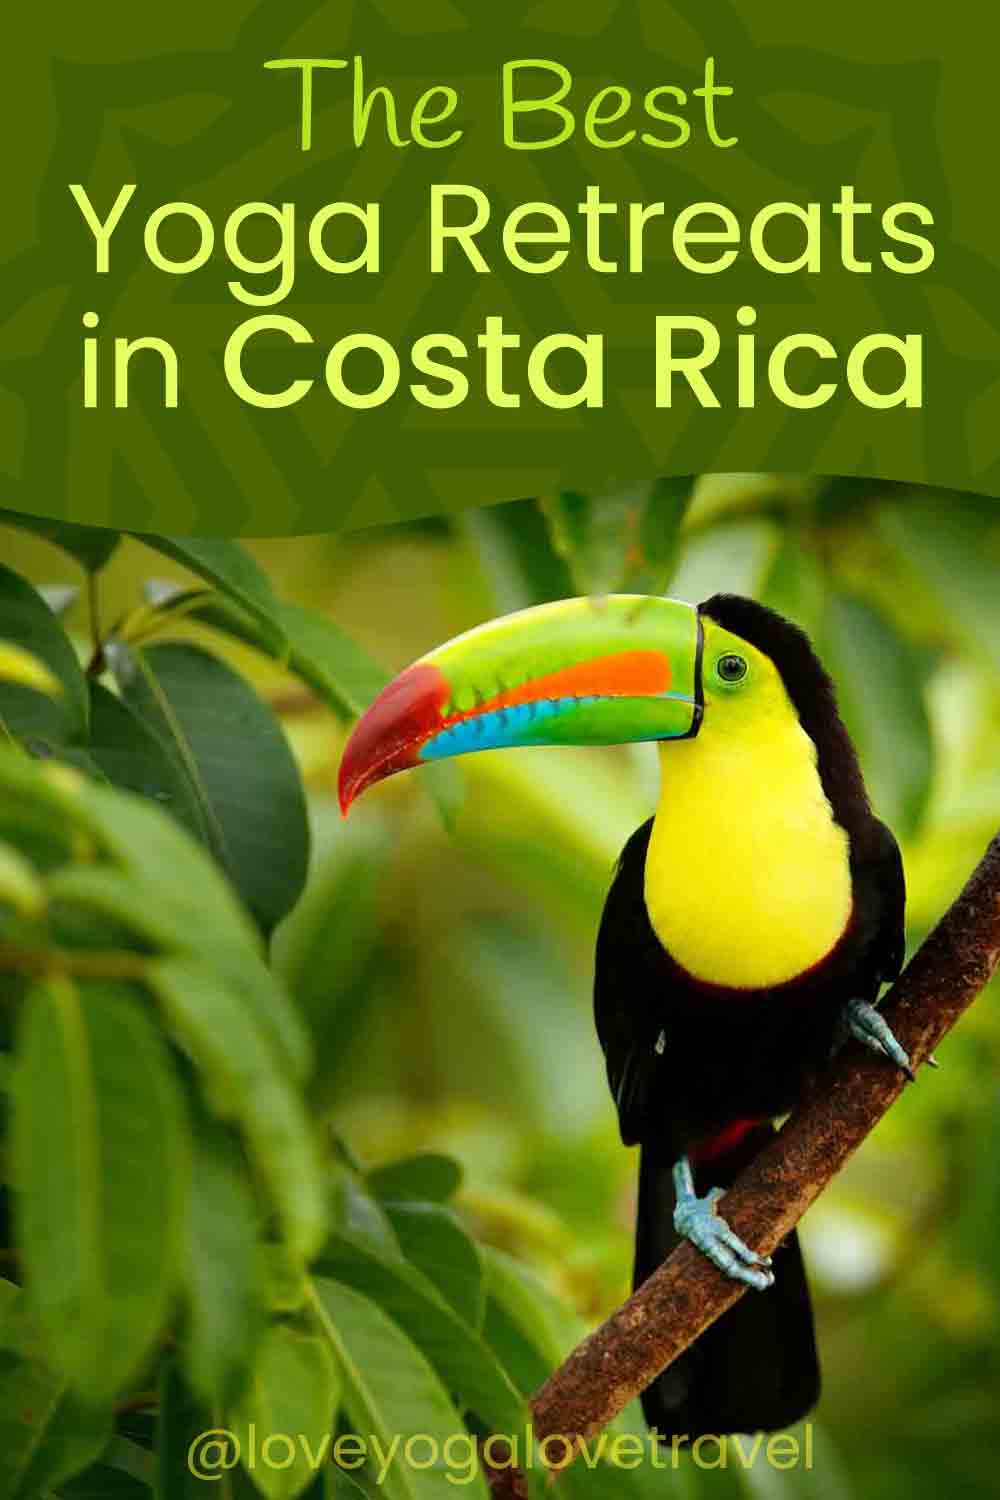 Pin Me! "The Best Yoga Retreats in Costa Rica"